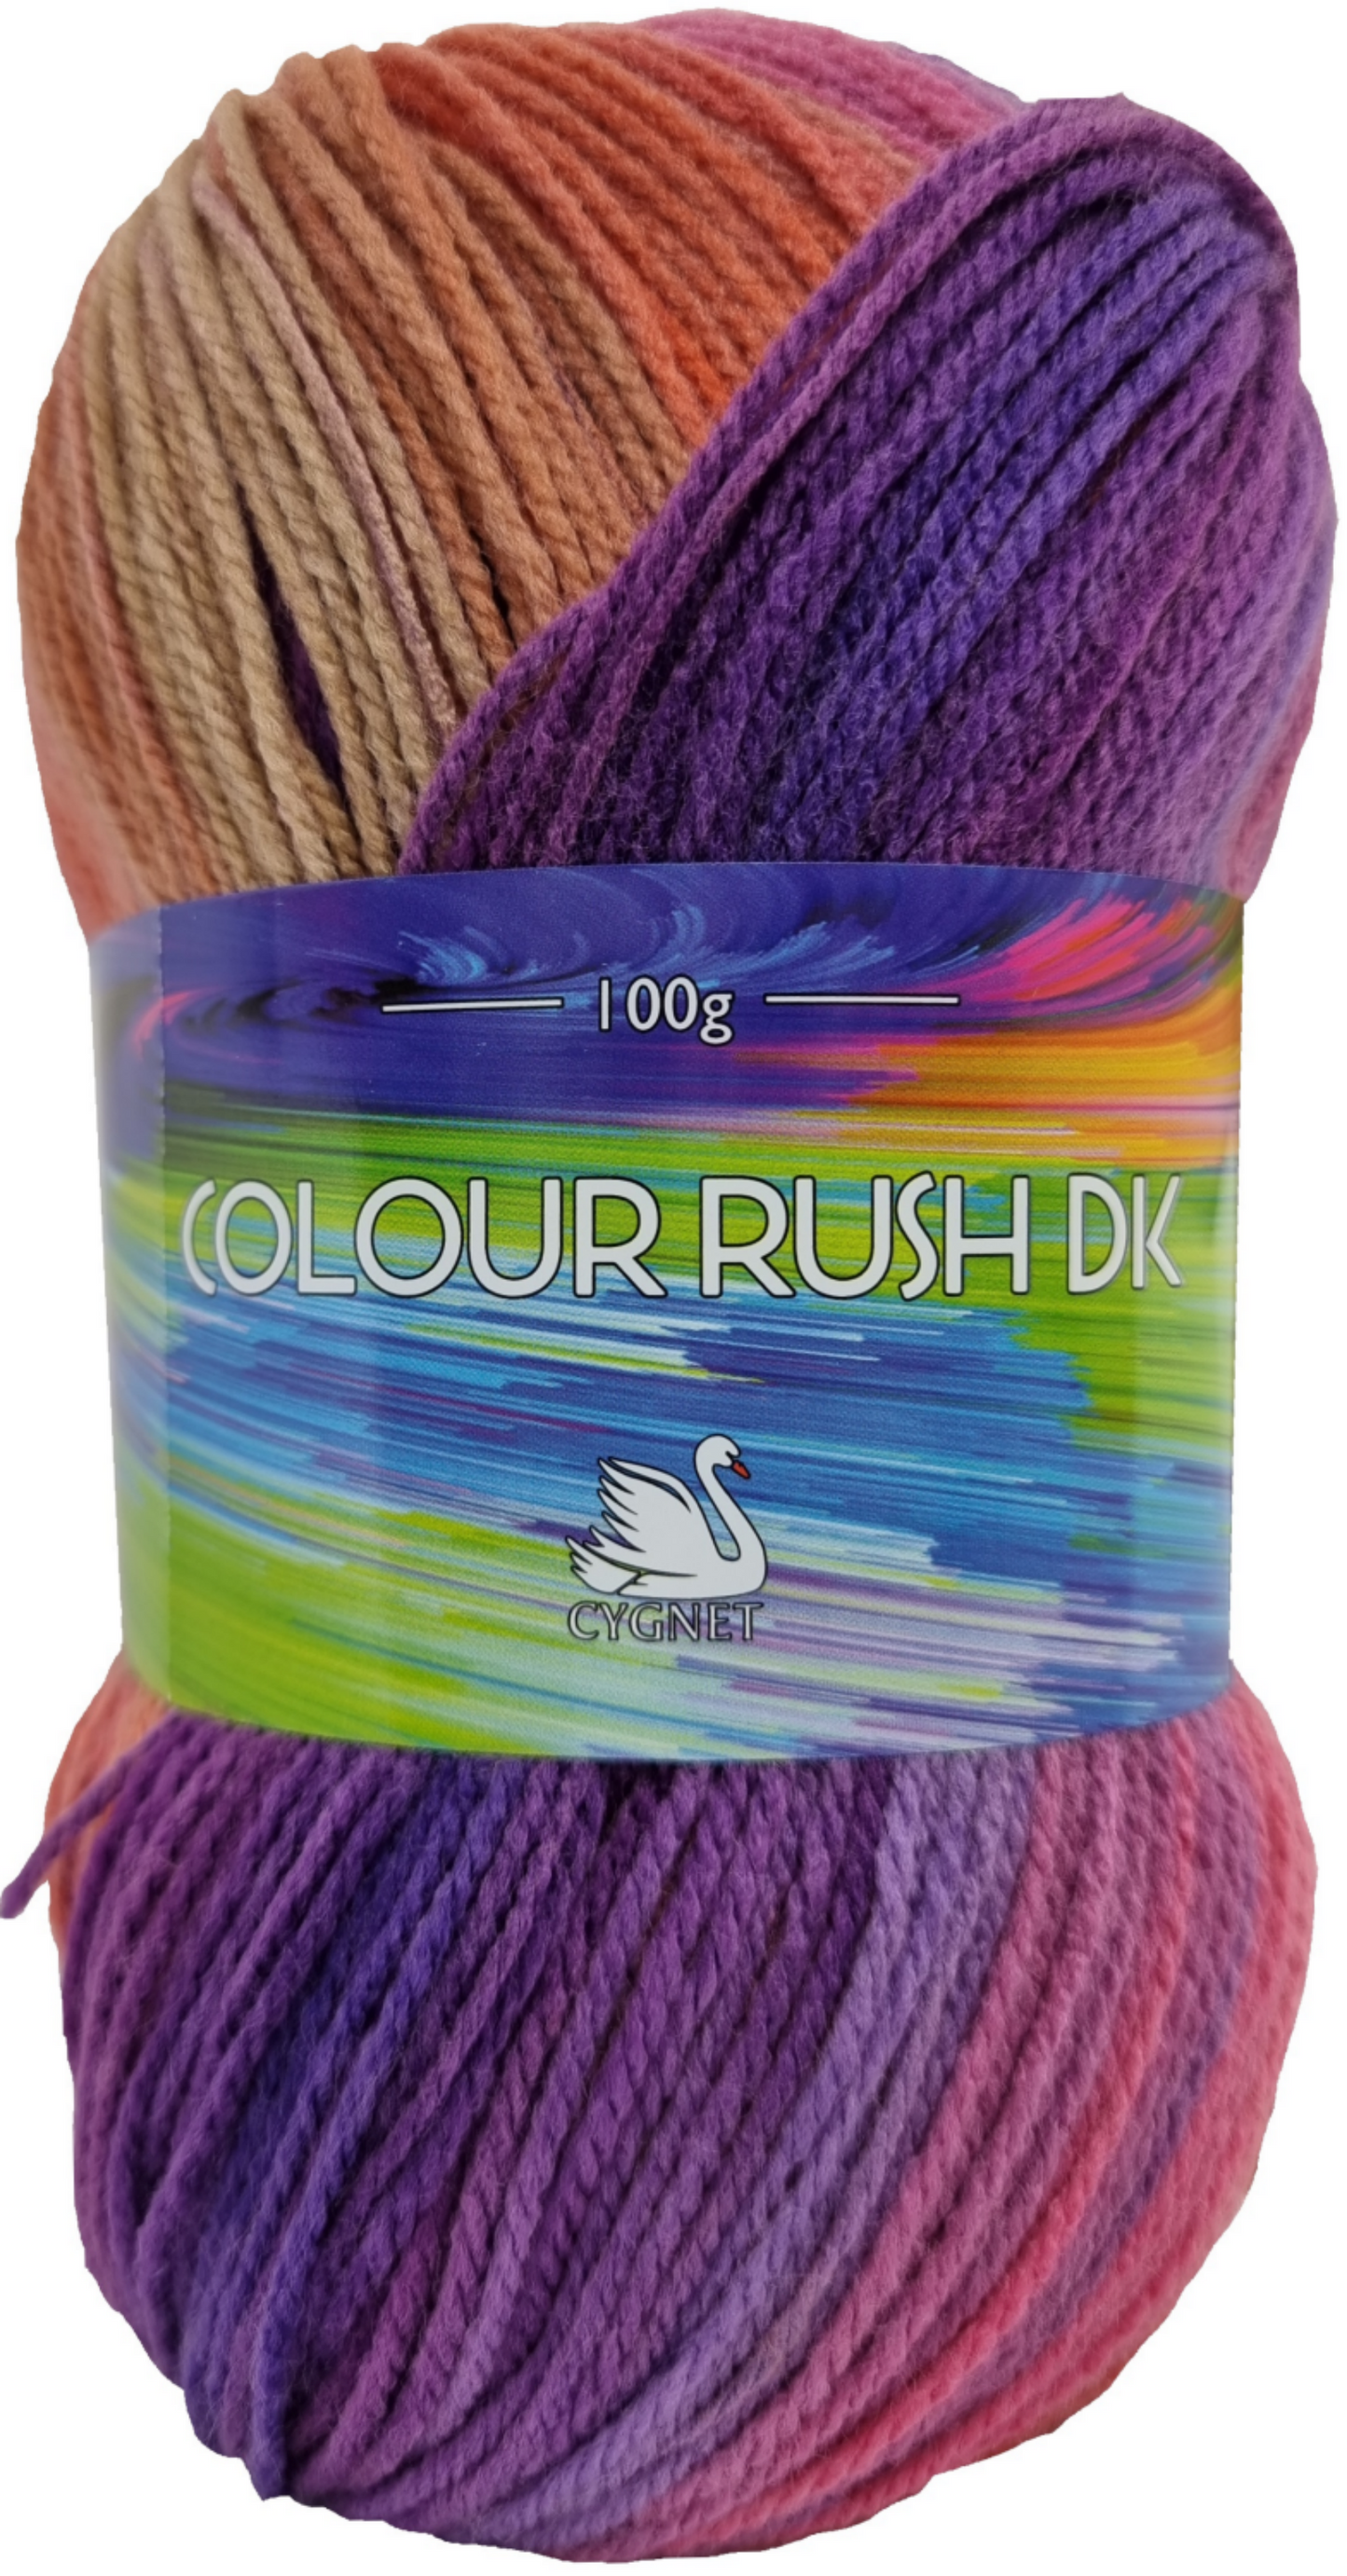 Duststorm - Colour Rush DK - Cygnet Yarn